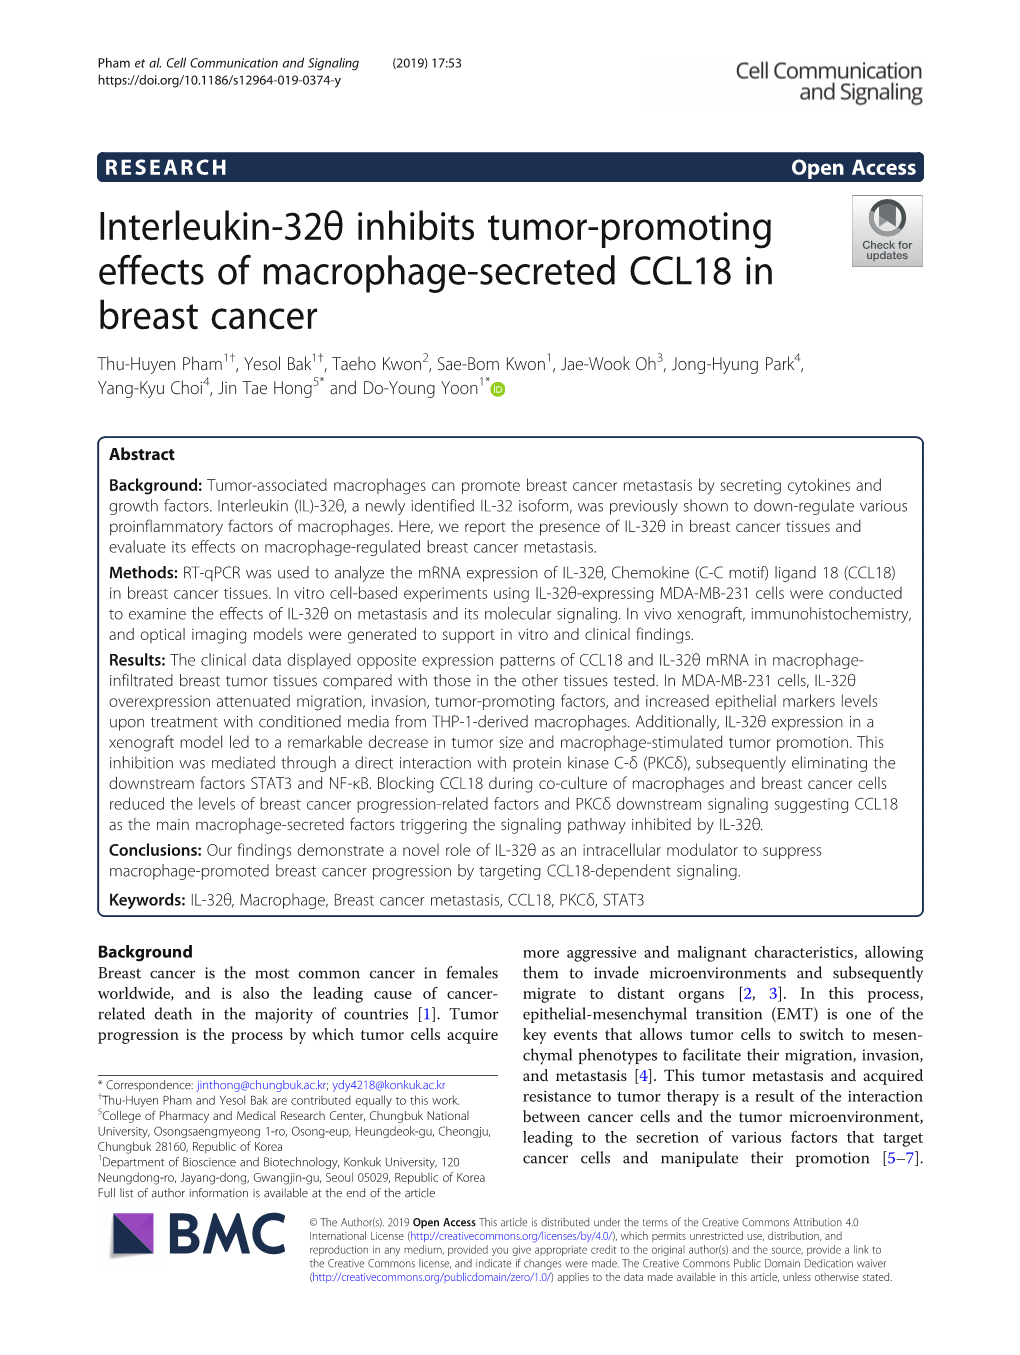 Interleukin-32Θ Inhibits Tumor-Promoting Effects Of